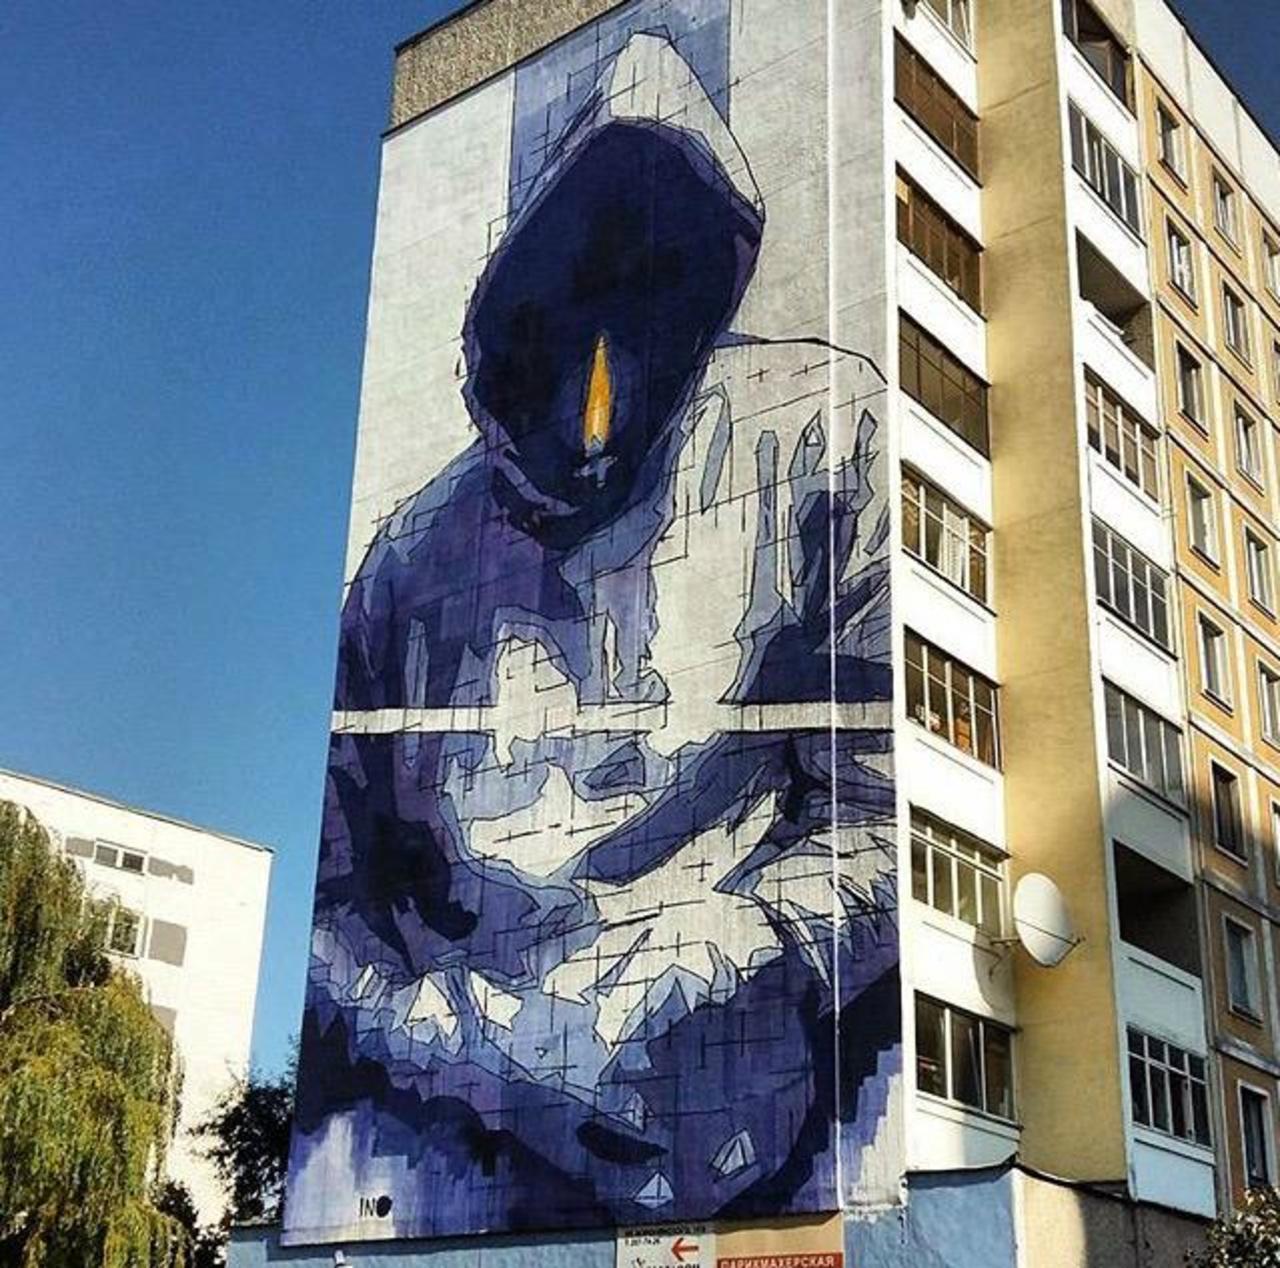 'Man With No Name' 
New Street Art by iNO in Minsk, Belarus 

#art #graffiti #mural #streetart http://t.co/aUn9mlFbOQ